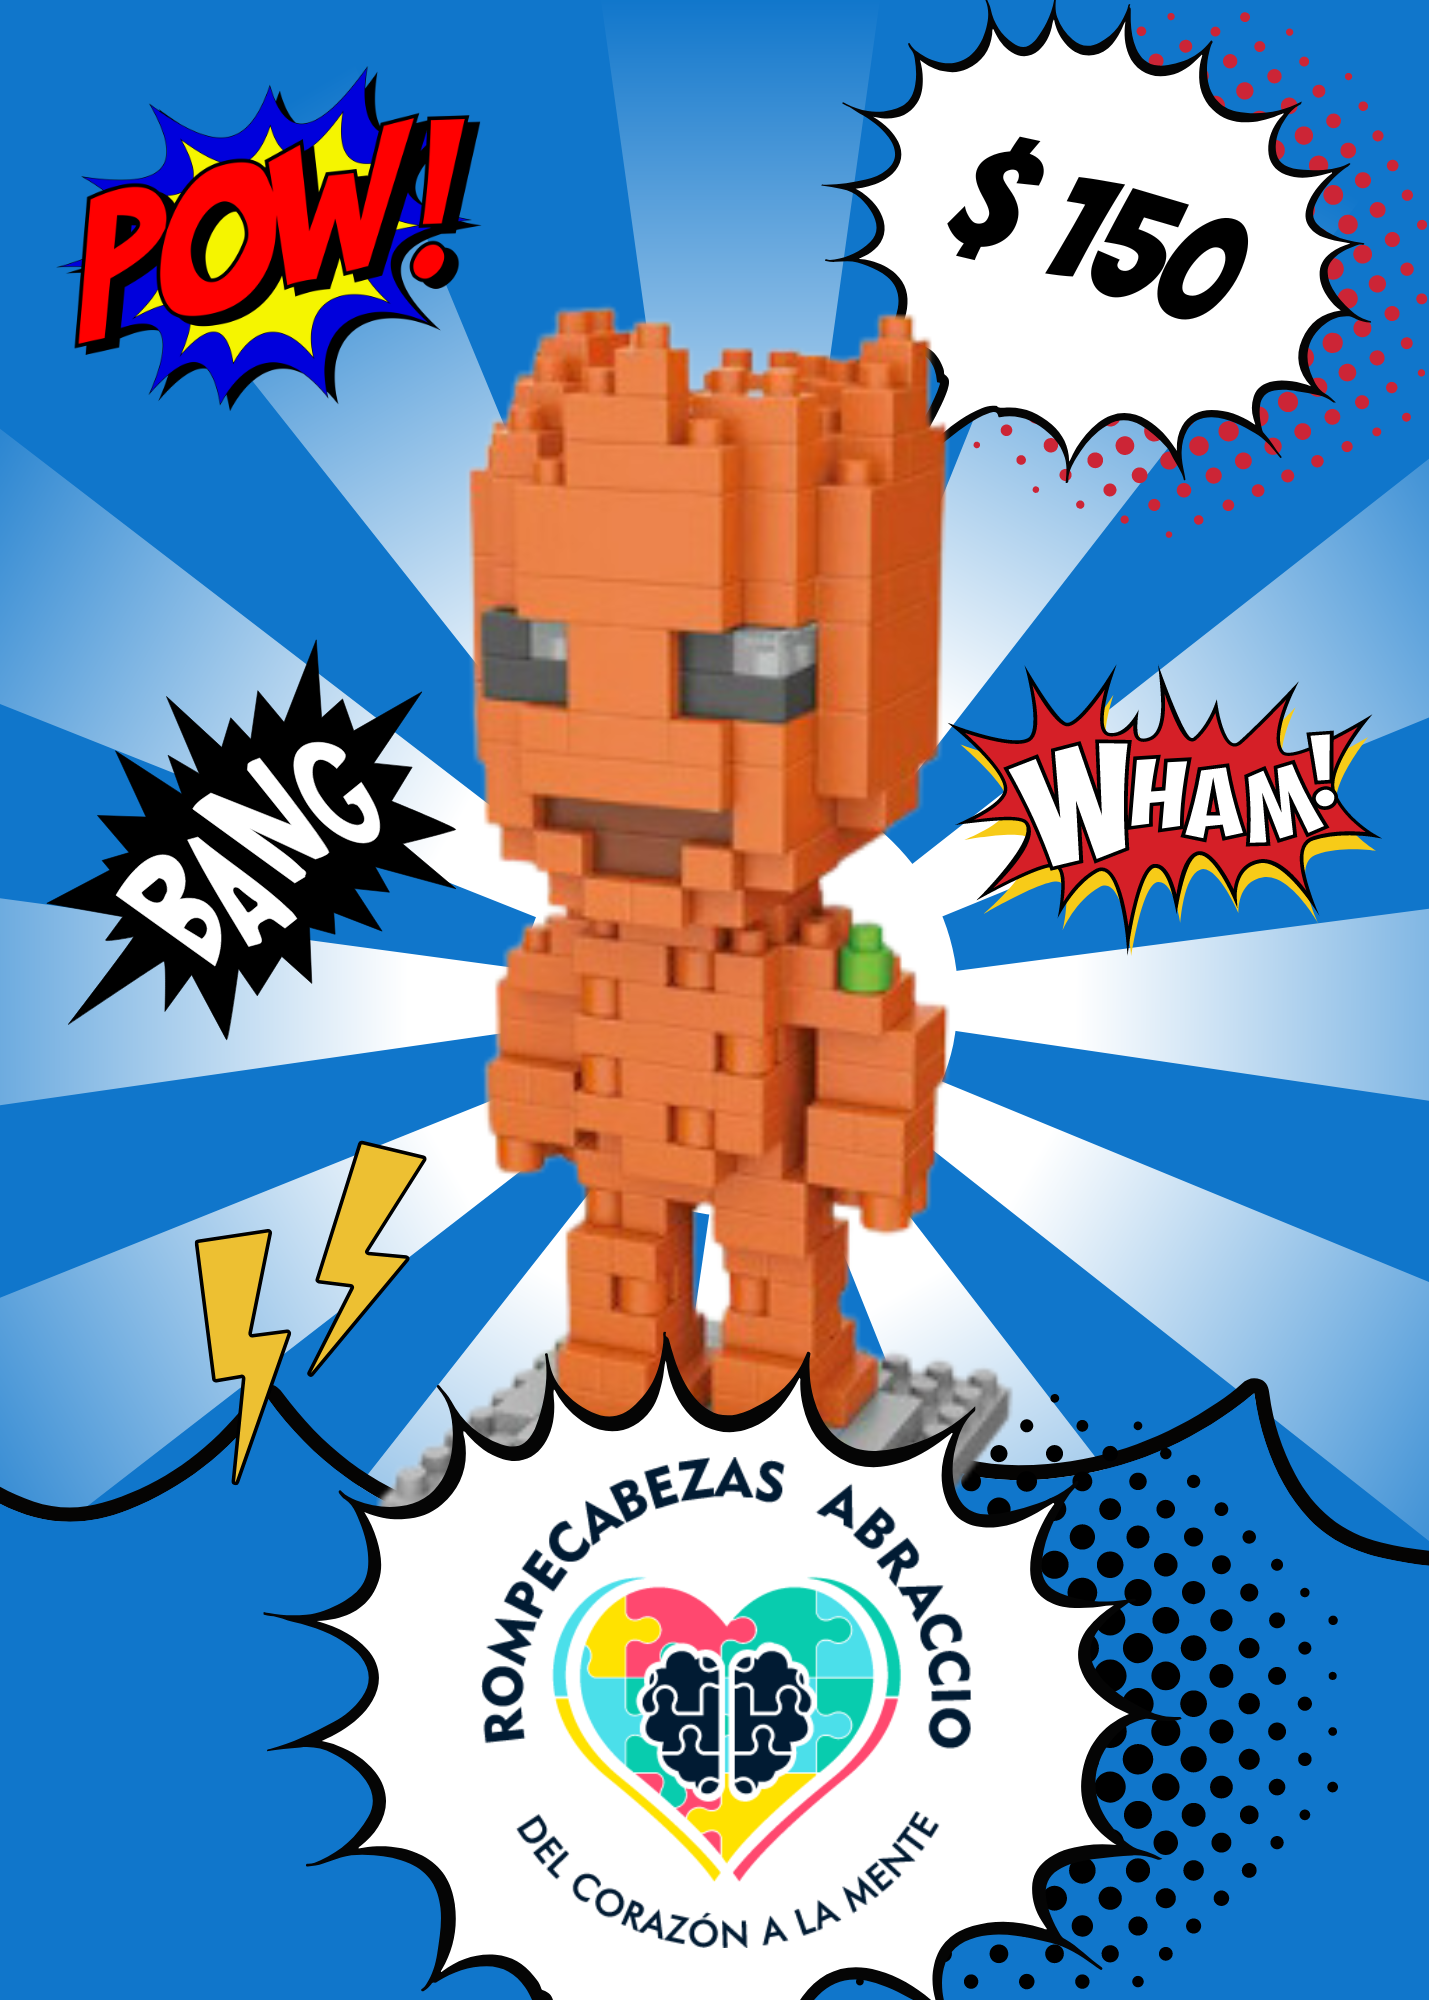 Groot Mini | (172 piezas) Miniblock